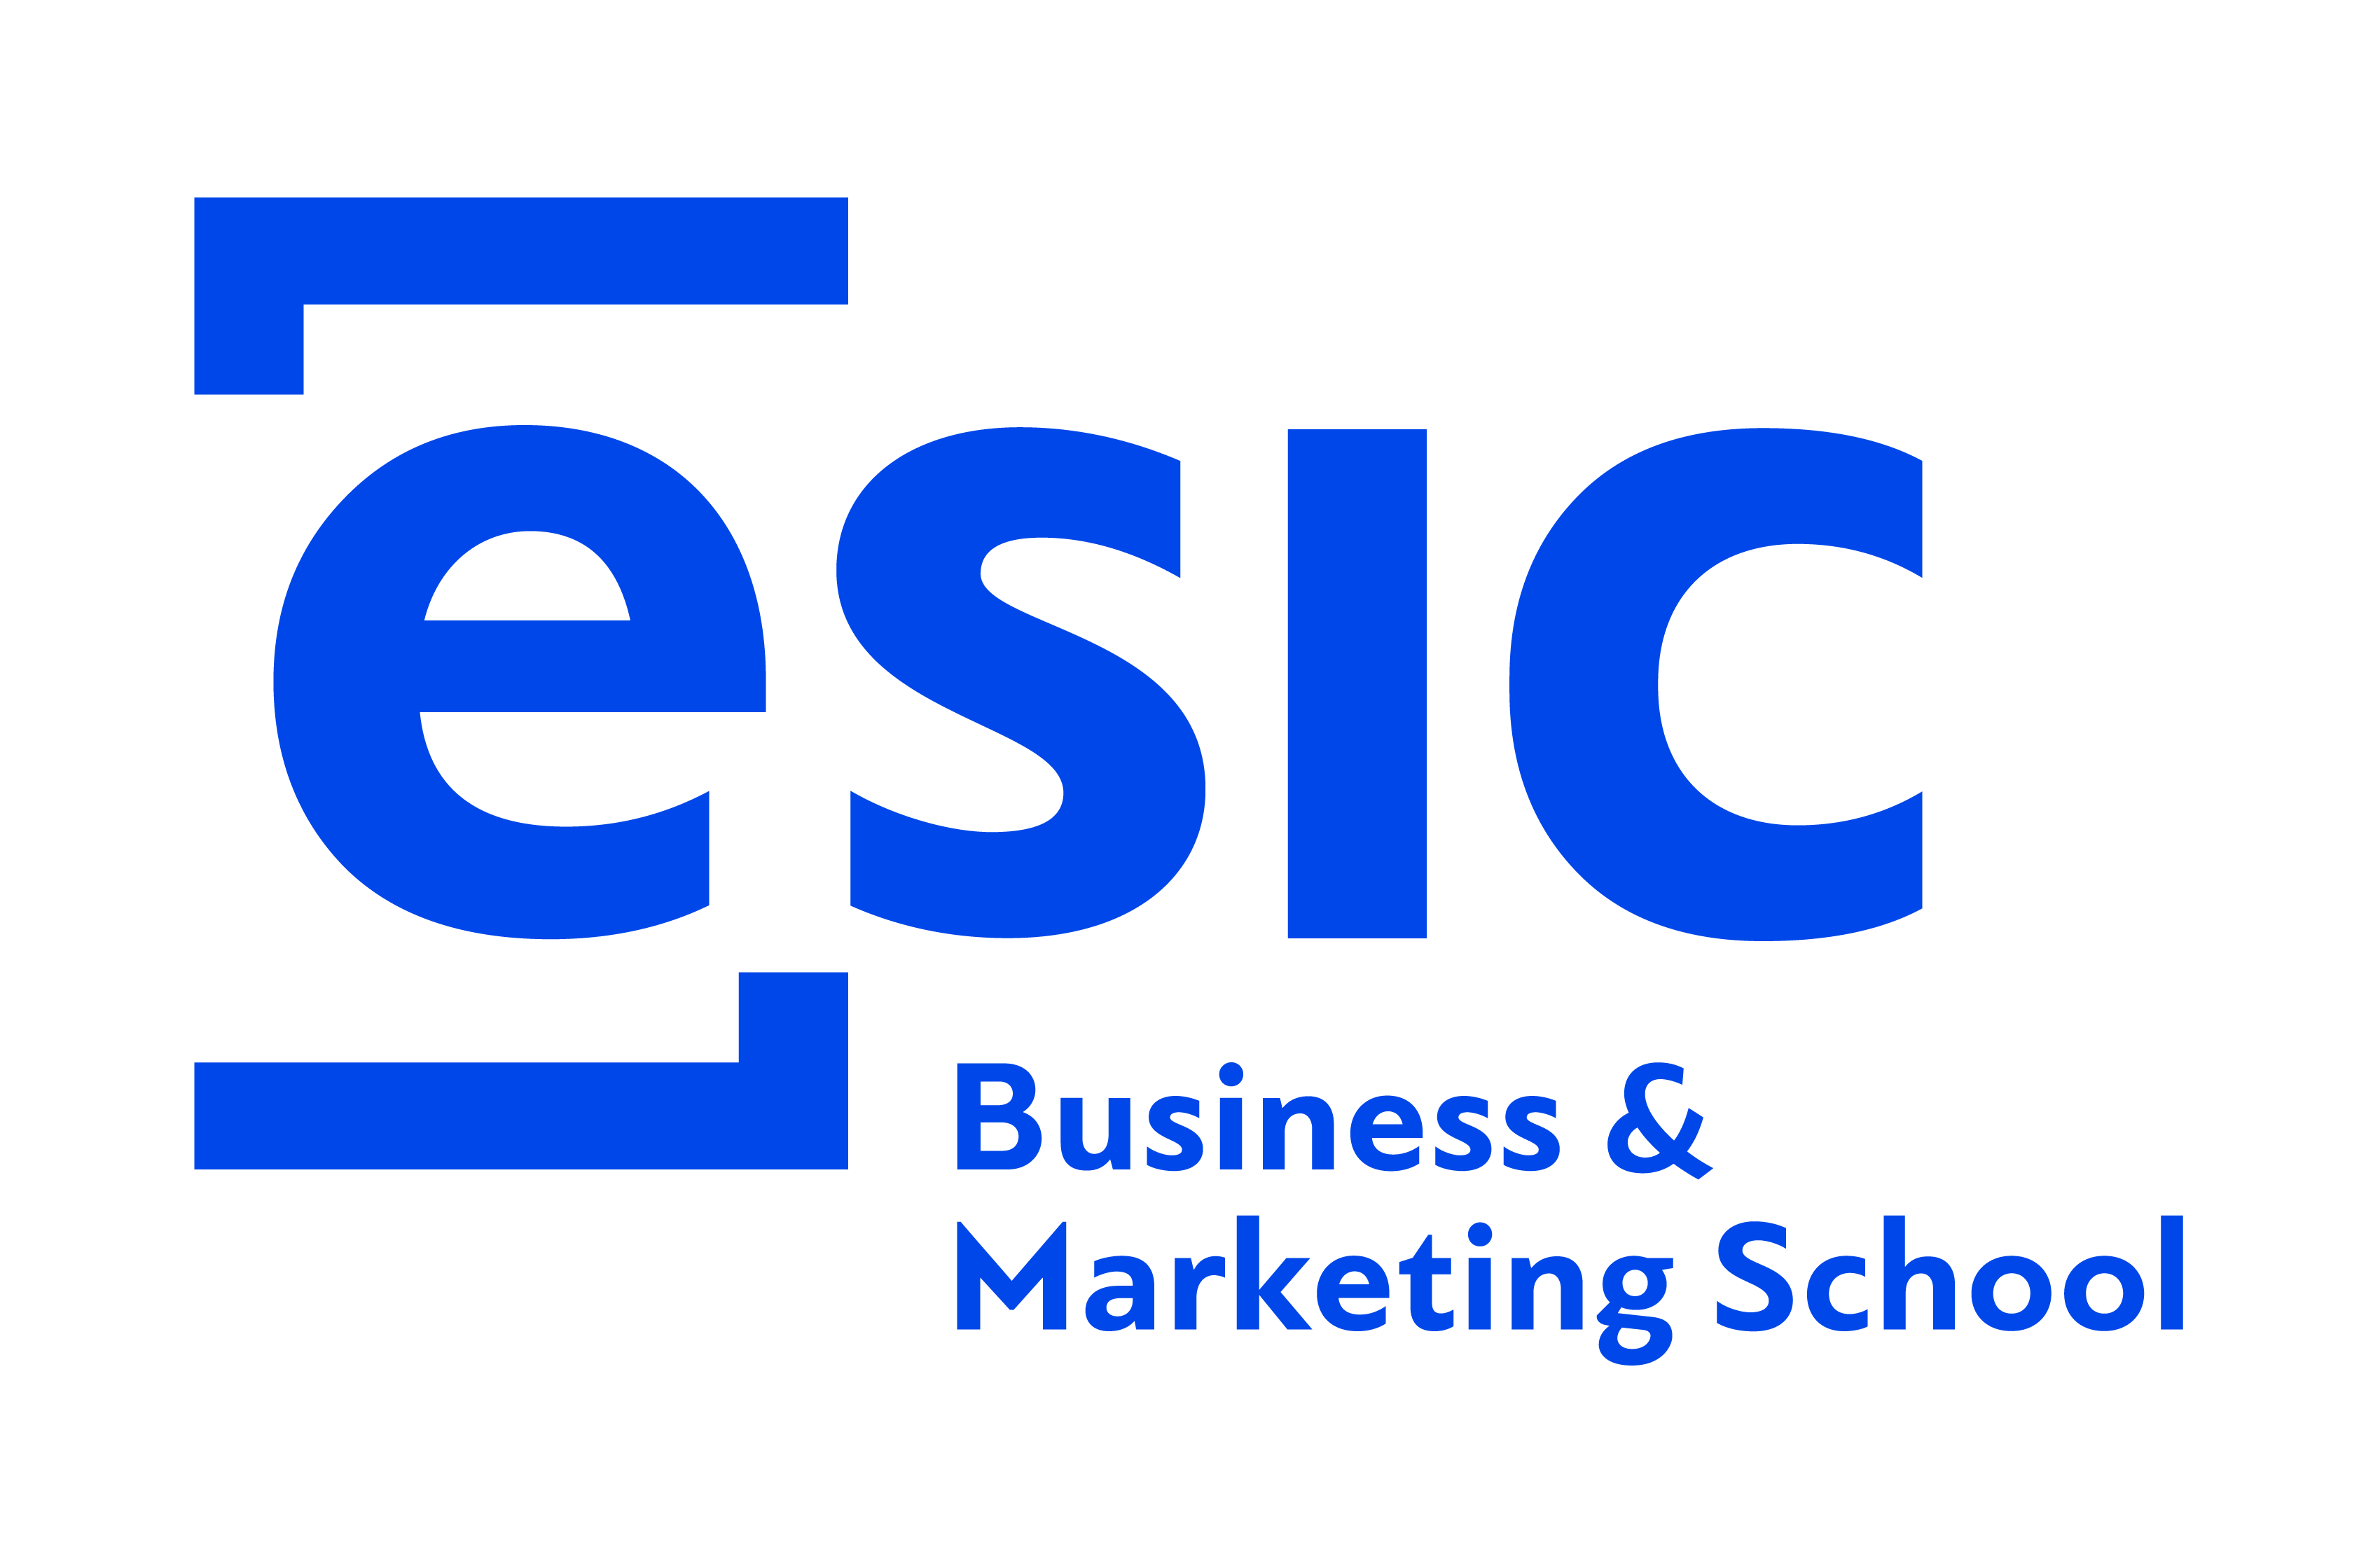 ESIC_Logos_RGB_Azul